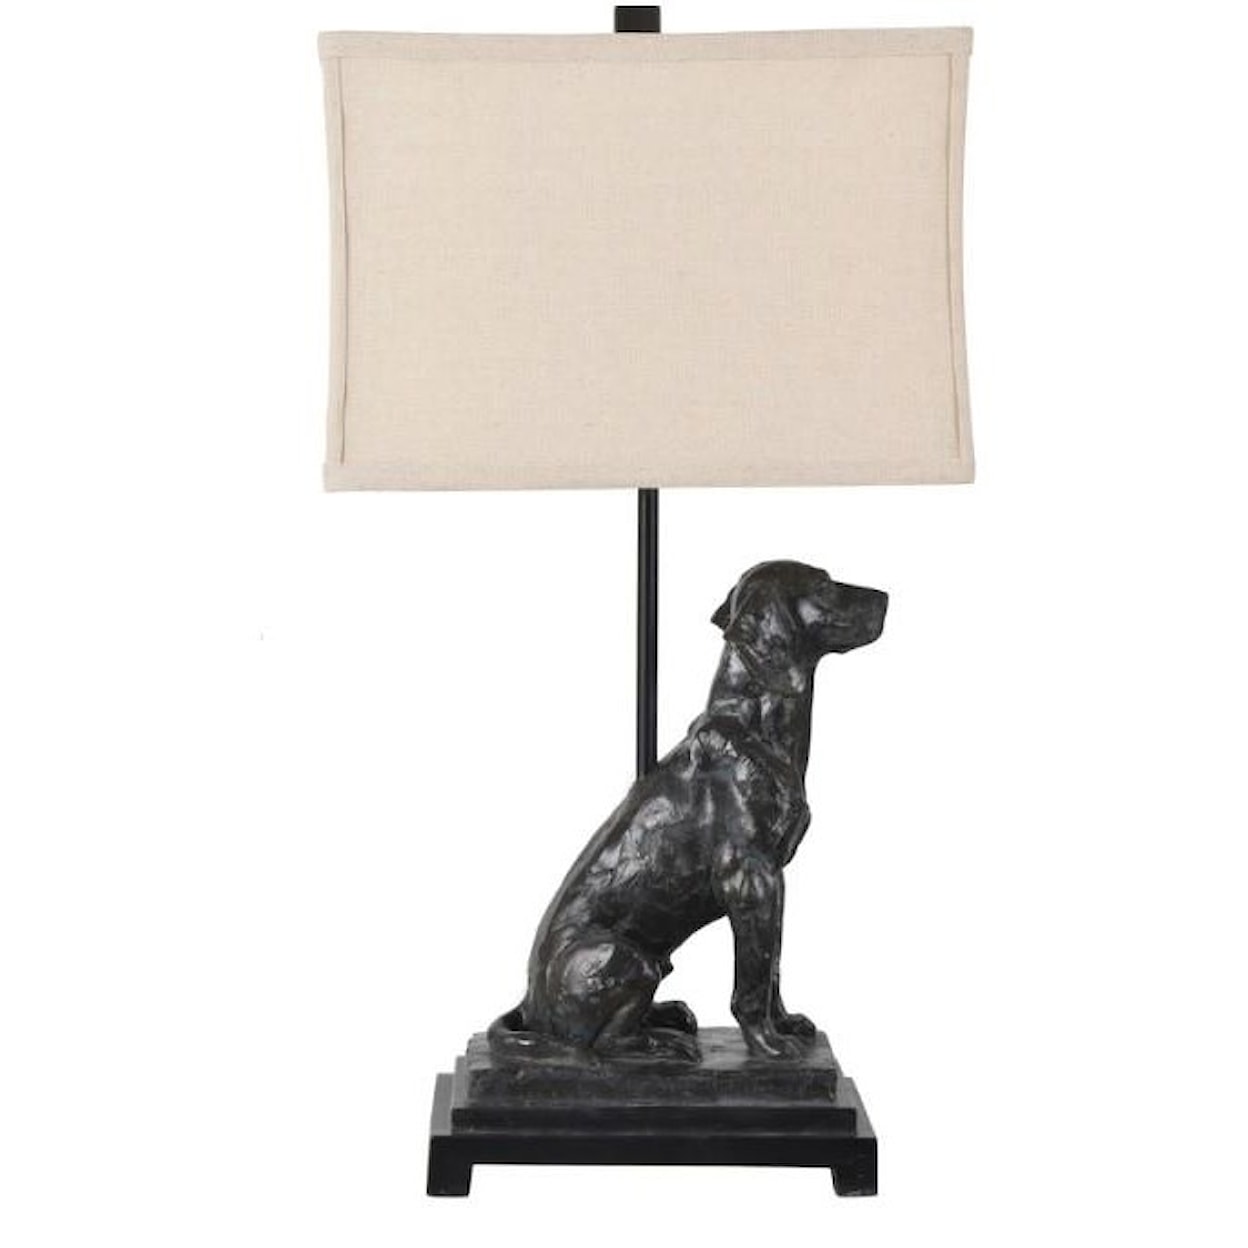 Crestview Collection Lighting Kipp Dog Accent Lamp